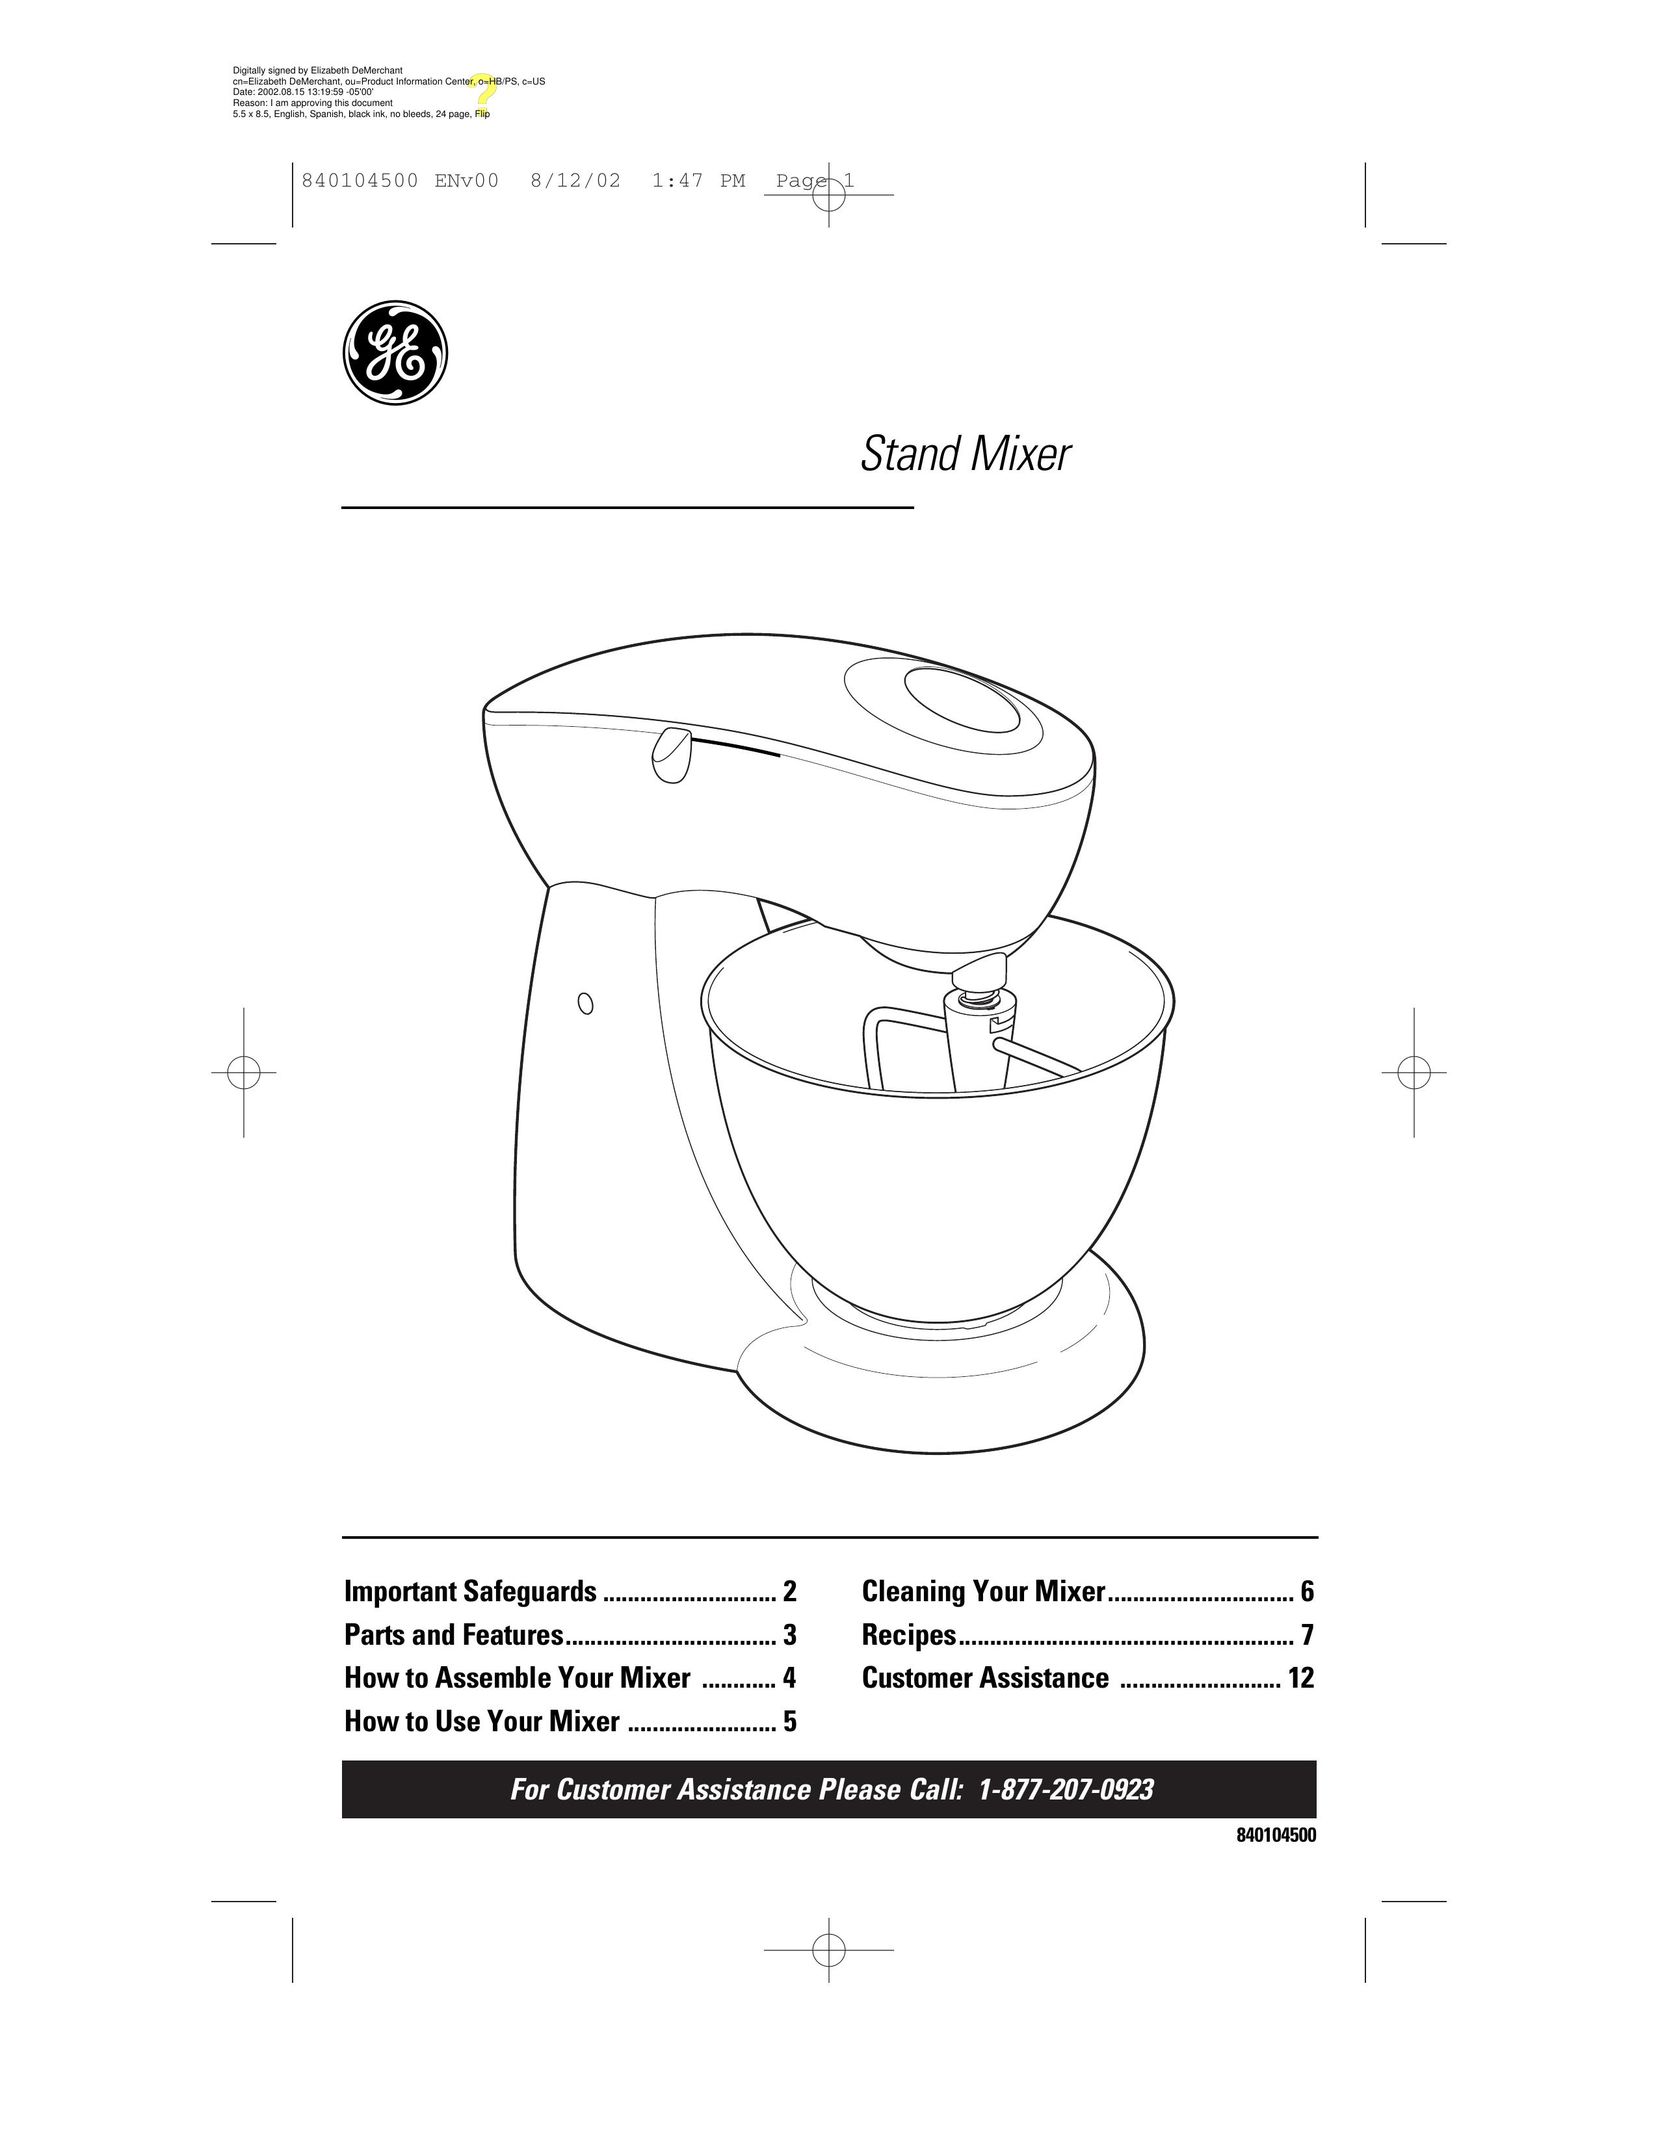 GE 840104500 Mixer User Manual